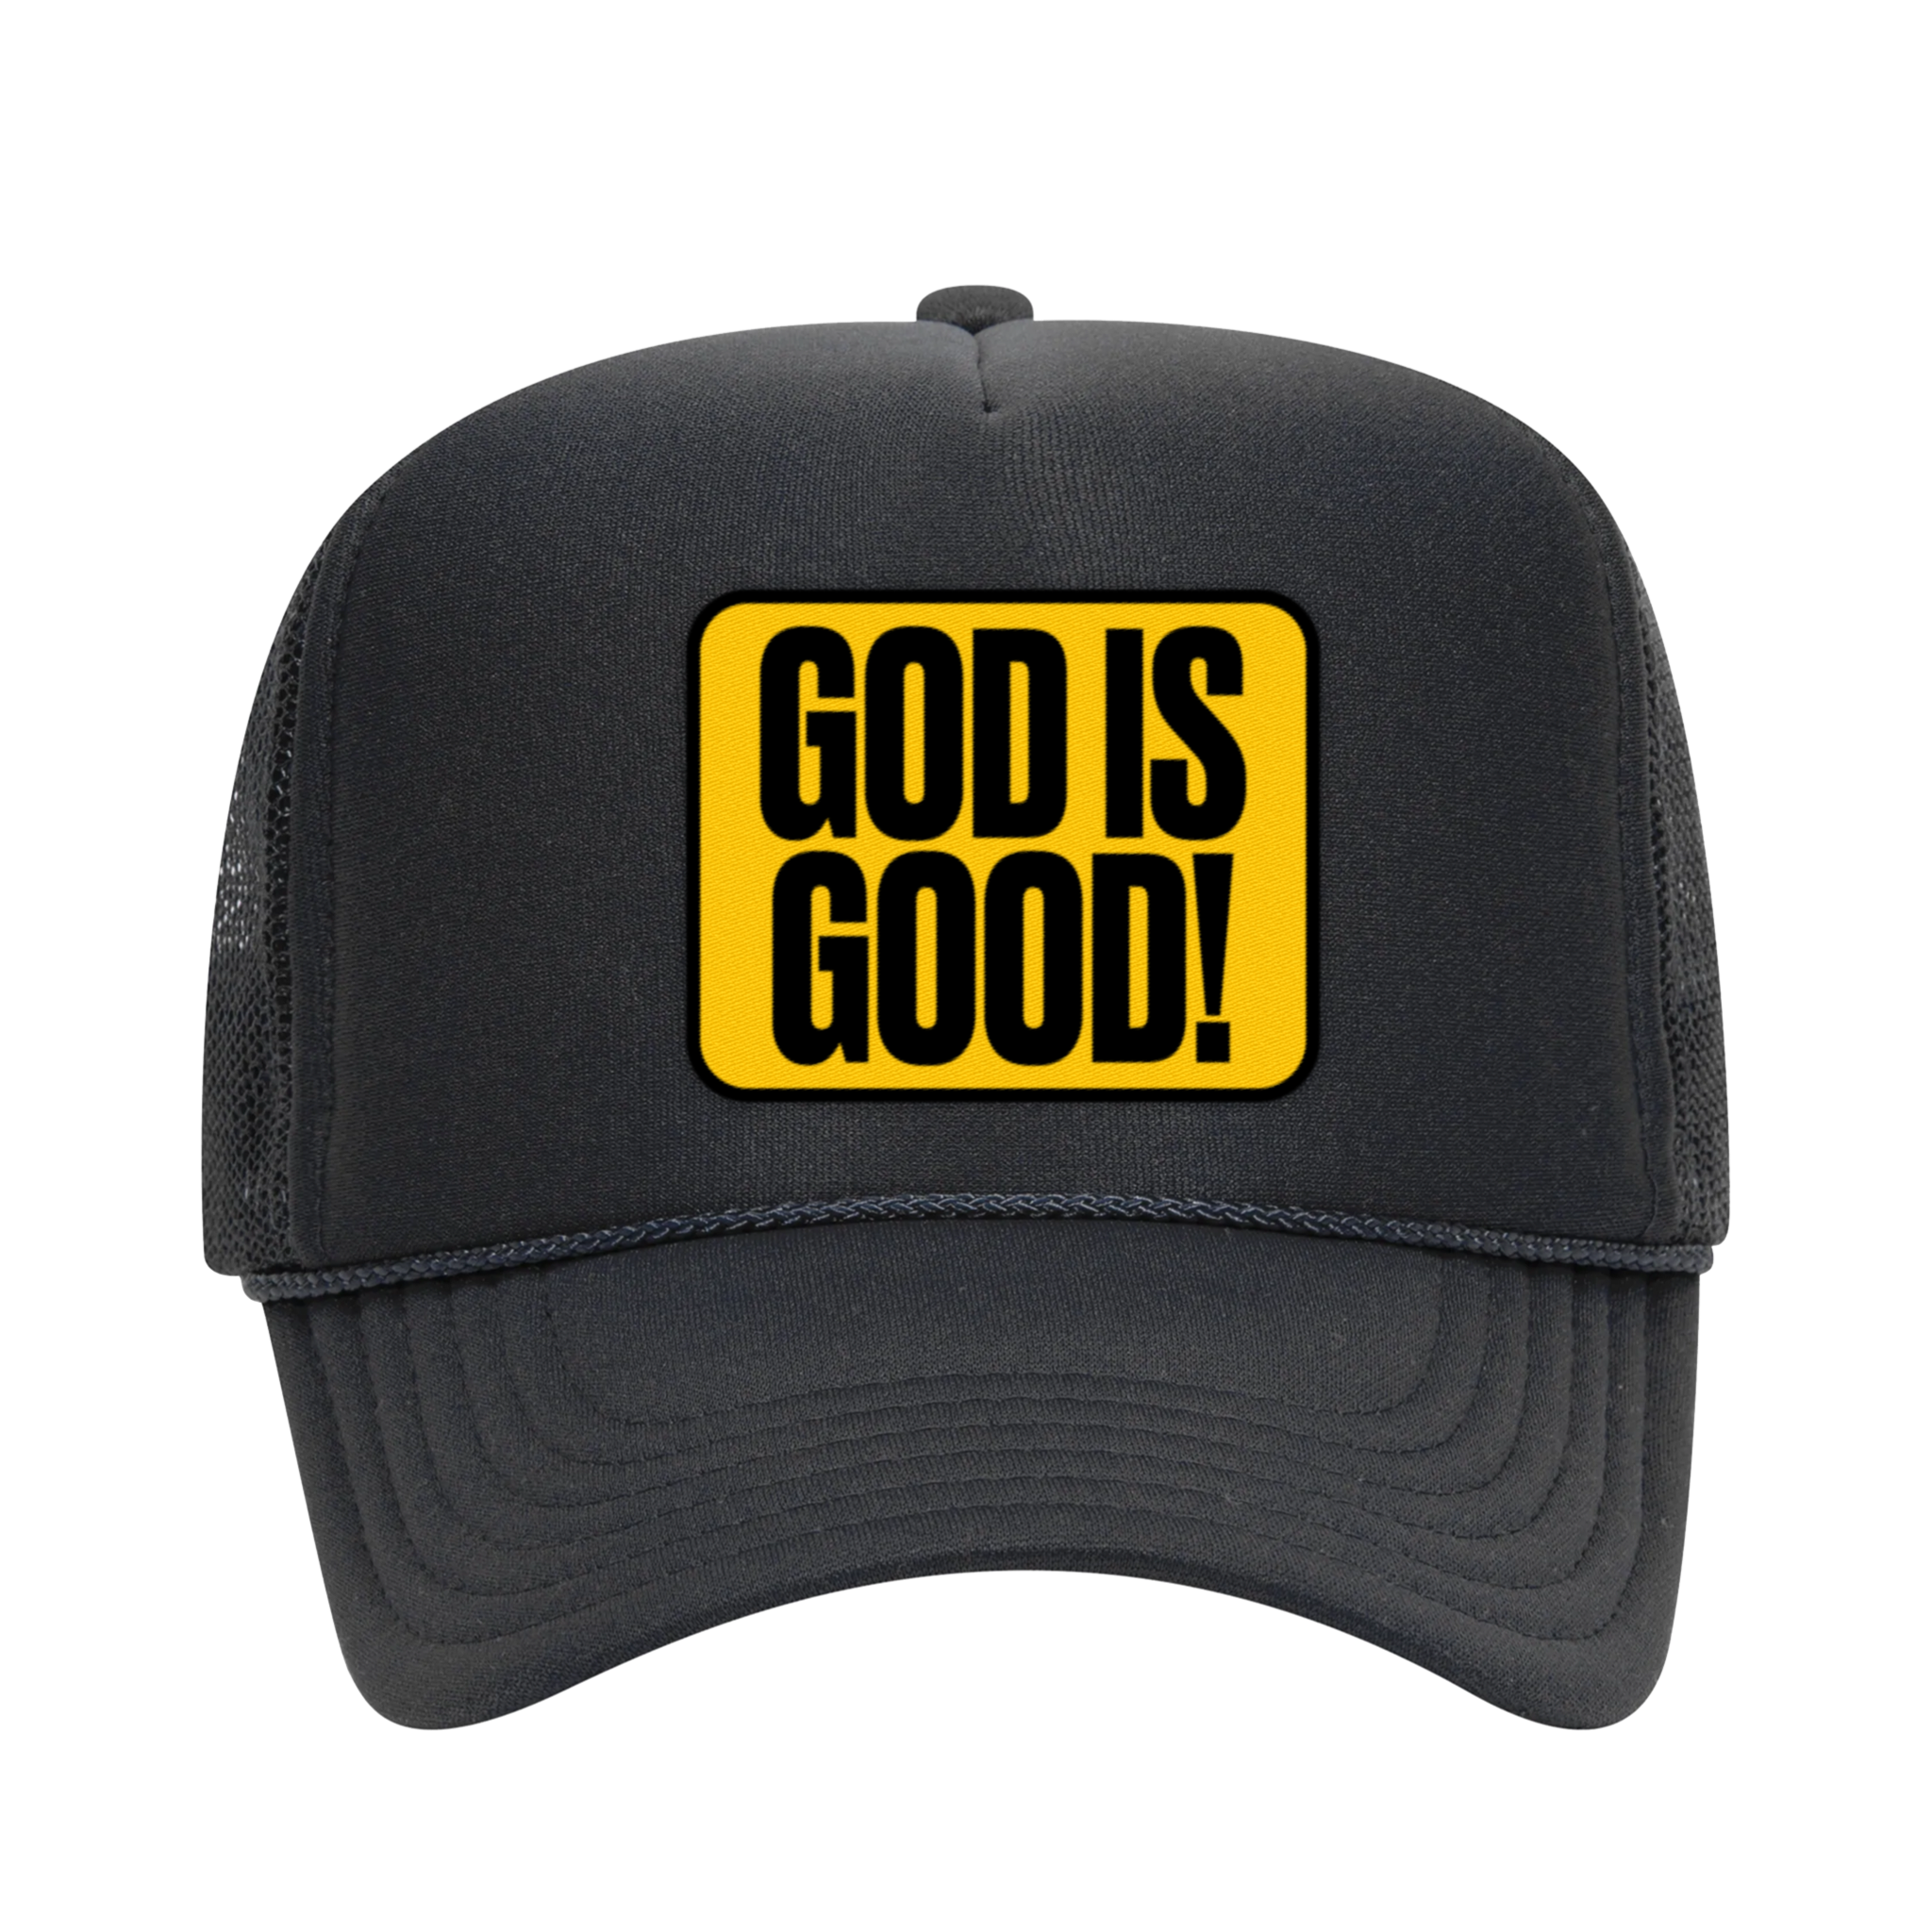 GOD IS GOOD! - TRUCKER HAT